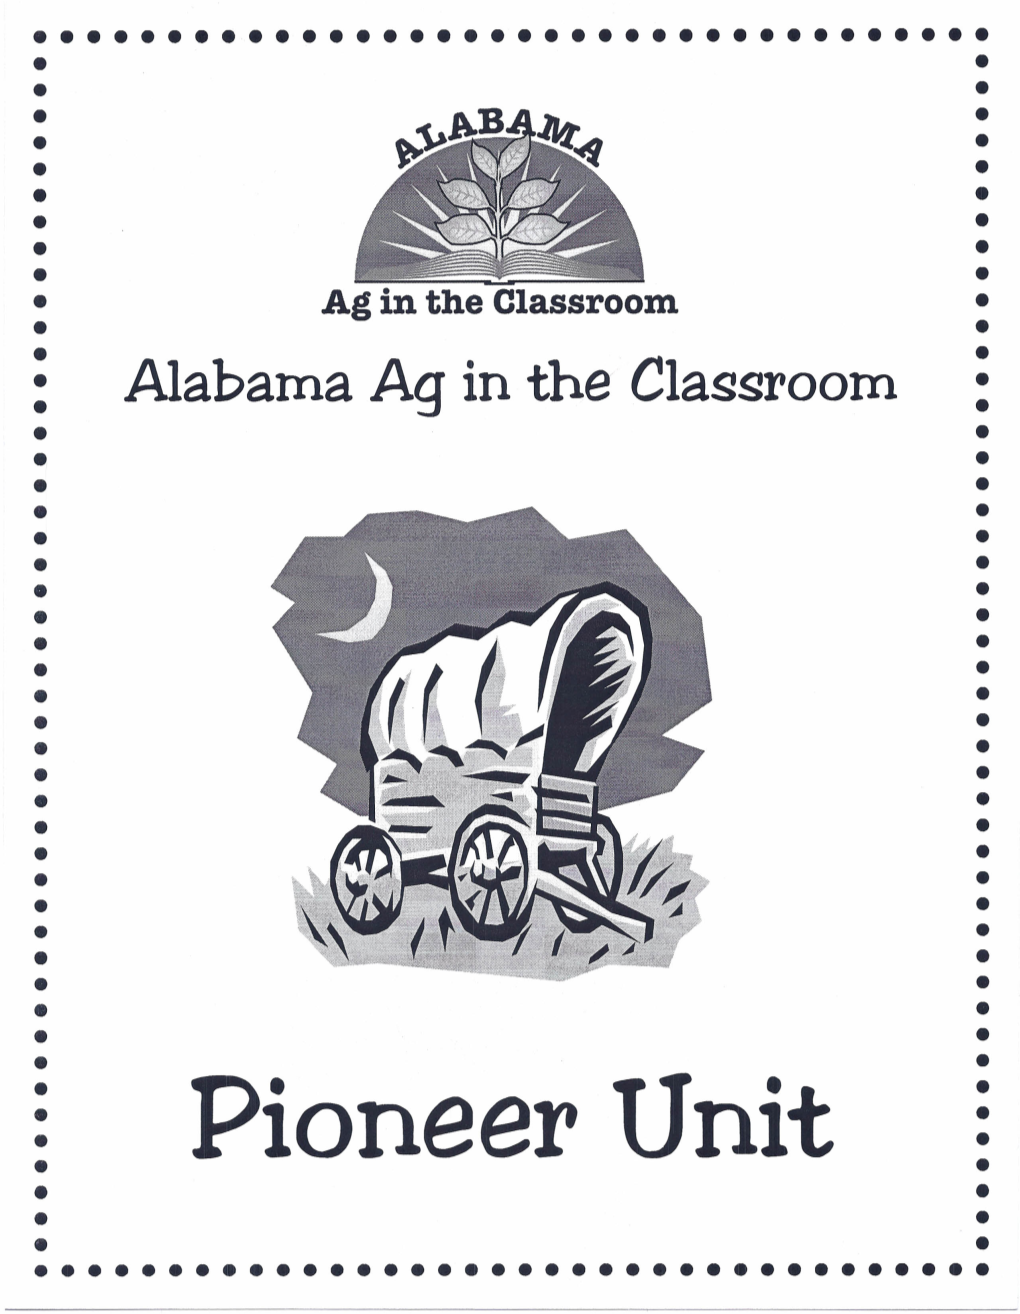 Pioneer Unit •: • • • • • • • ••••••••••••••••••••••••••••••••••• I the Pioneers I